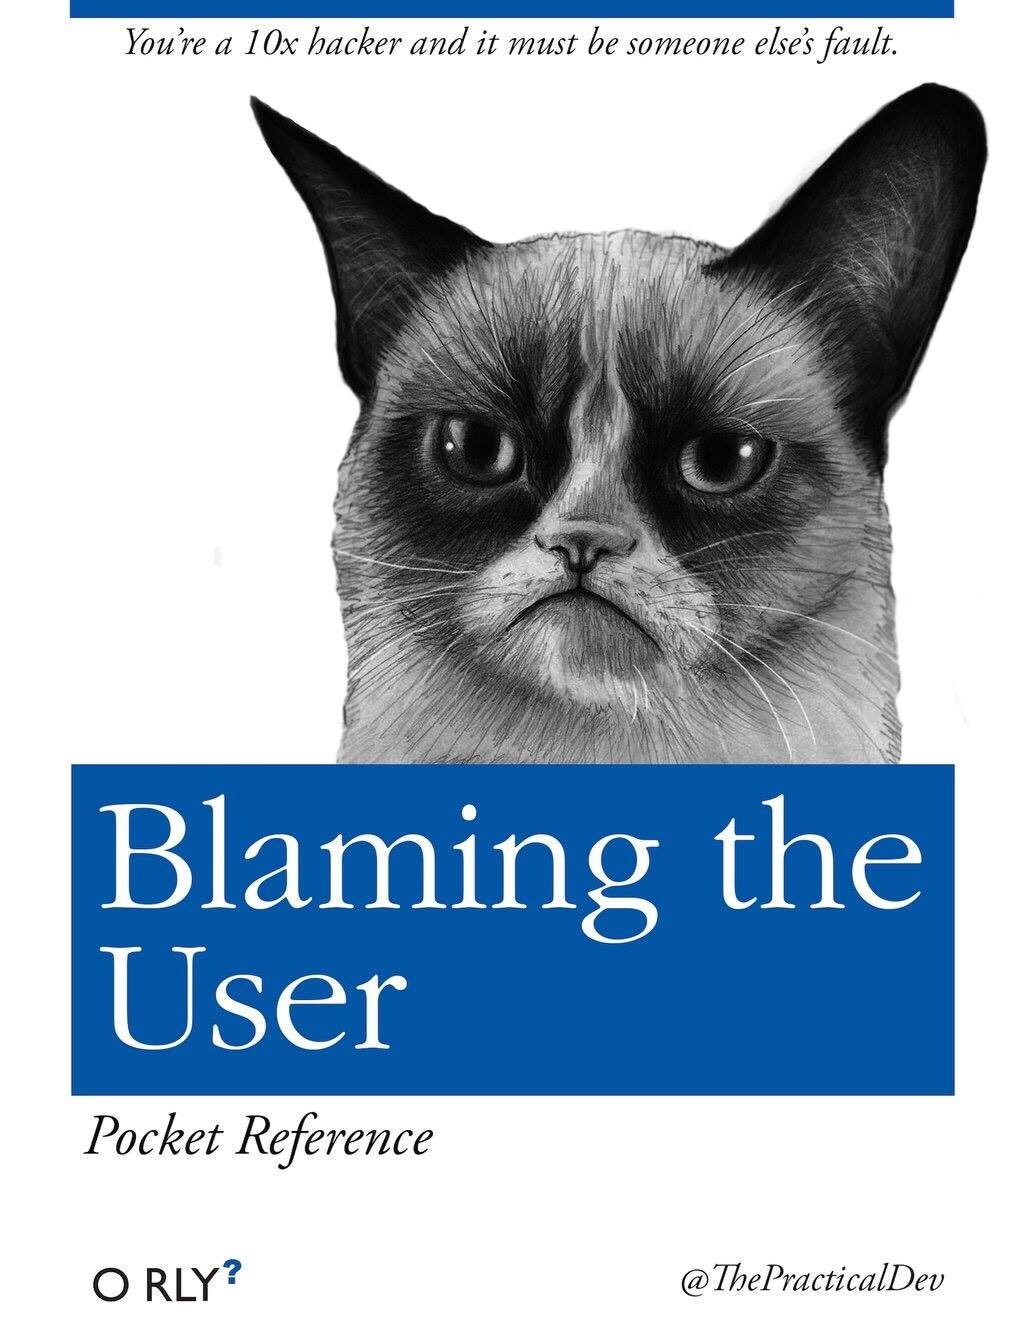 O'Reilly book title meme. A grumpy cat, book title: "Blaming the user"